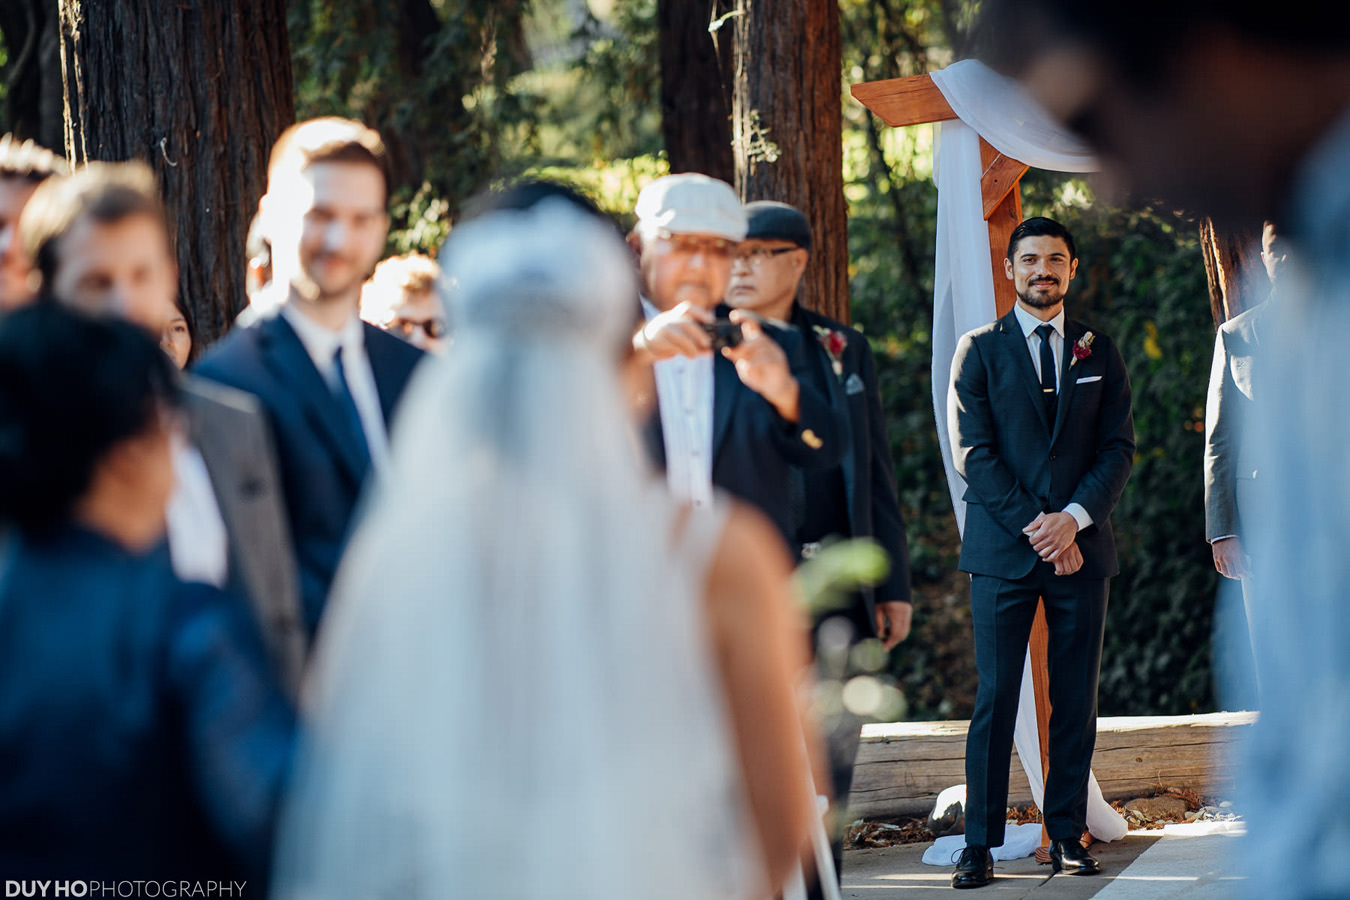 Piedmont Community Hall Wedding Photo | Oakland, CA | Duy Ho Photography